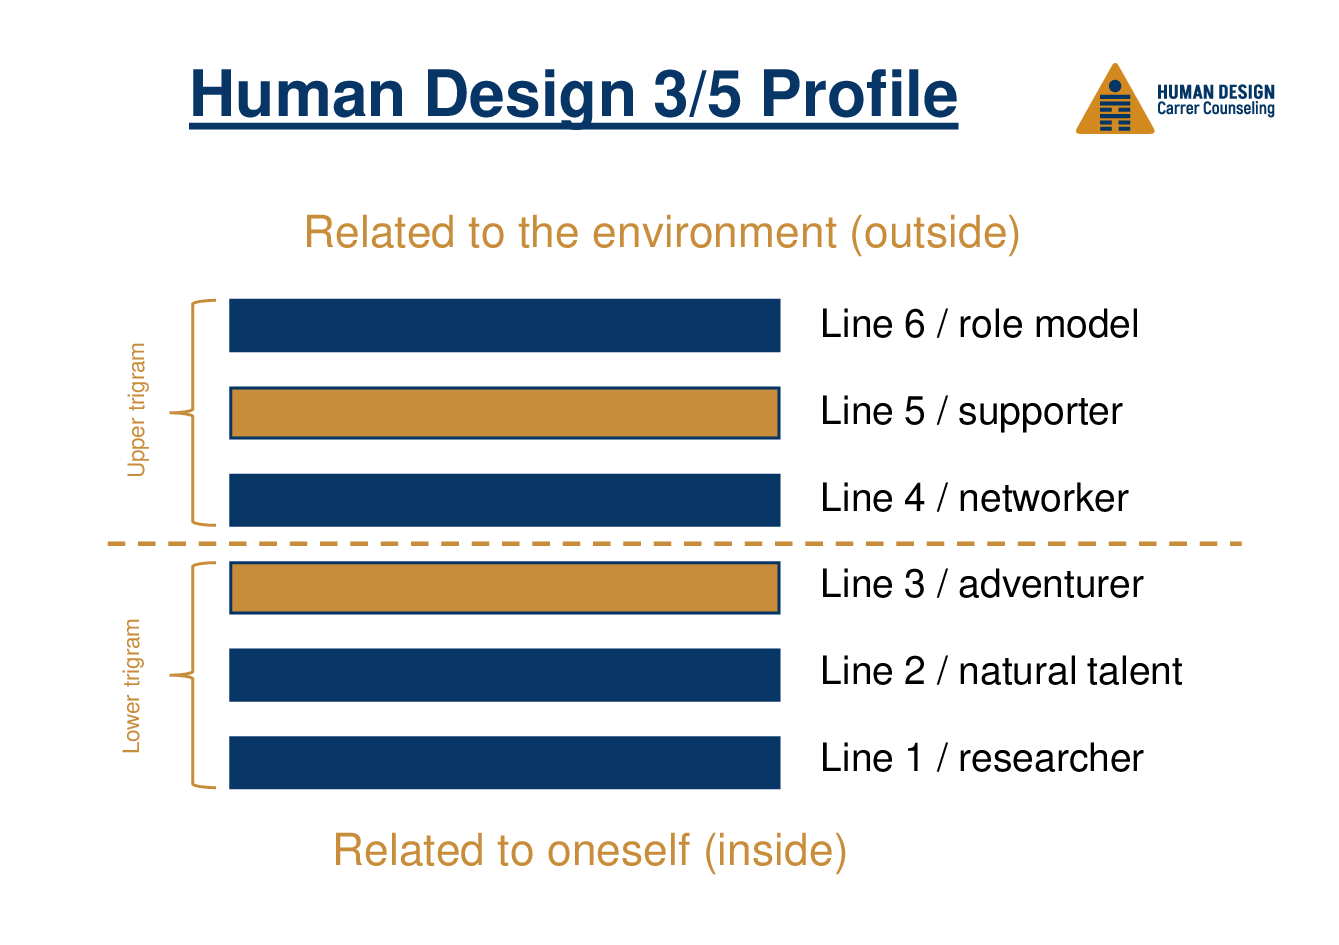 Human Design 3/5 Profile on the job